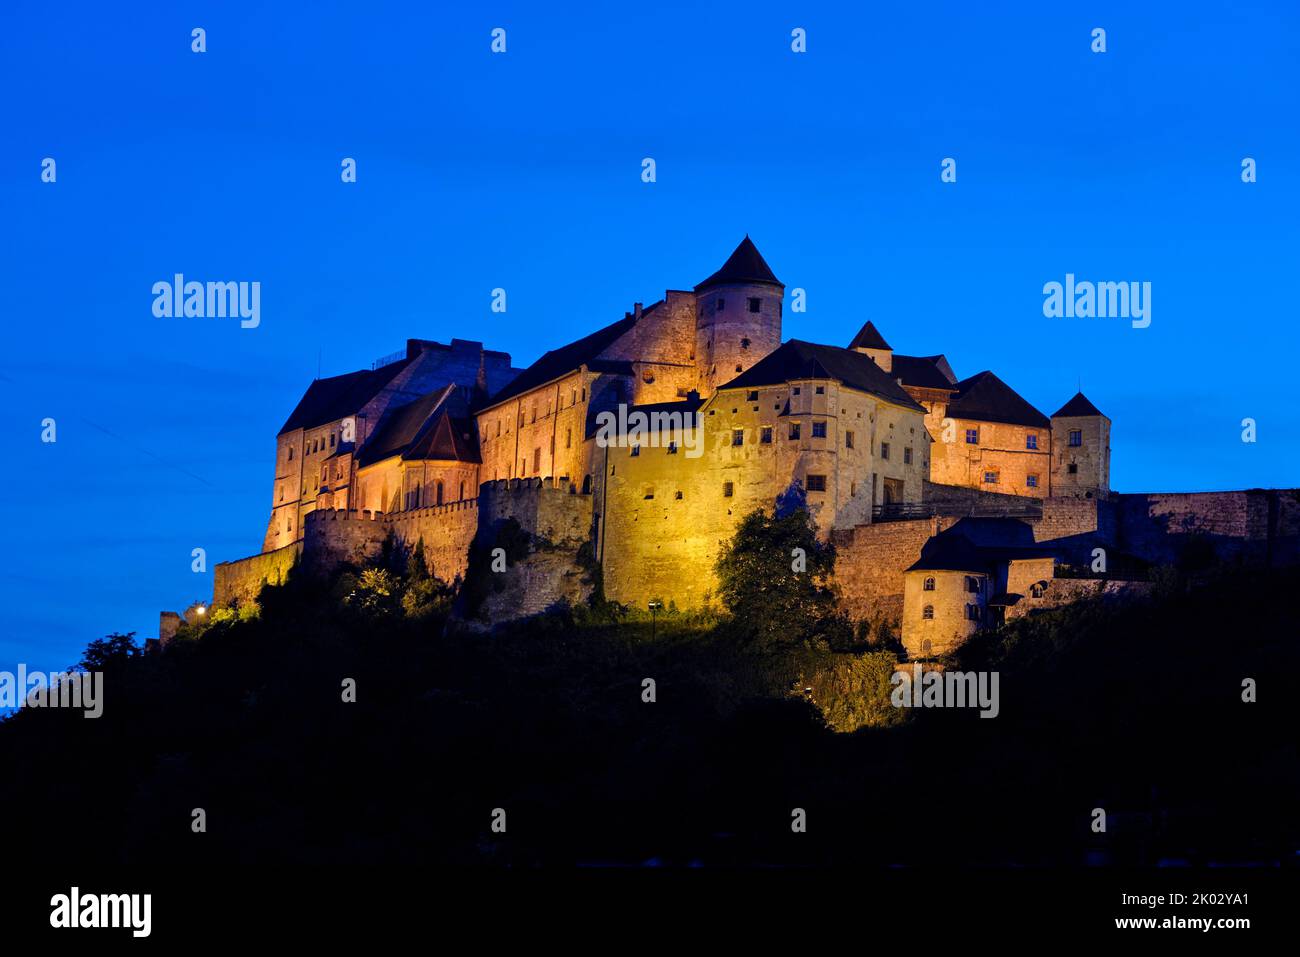 Germany, Bavaria, Upper Bavaria, Burghausen, castle, main castle, evening, illuminated Stock Photo